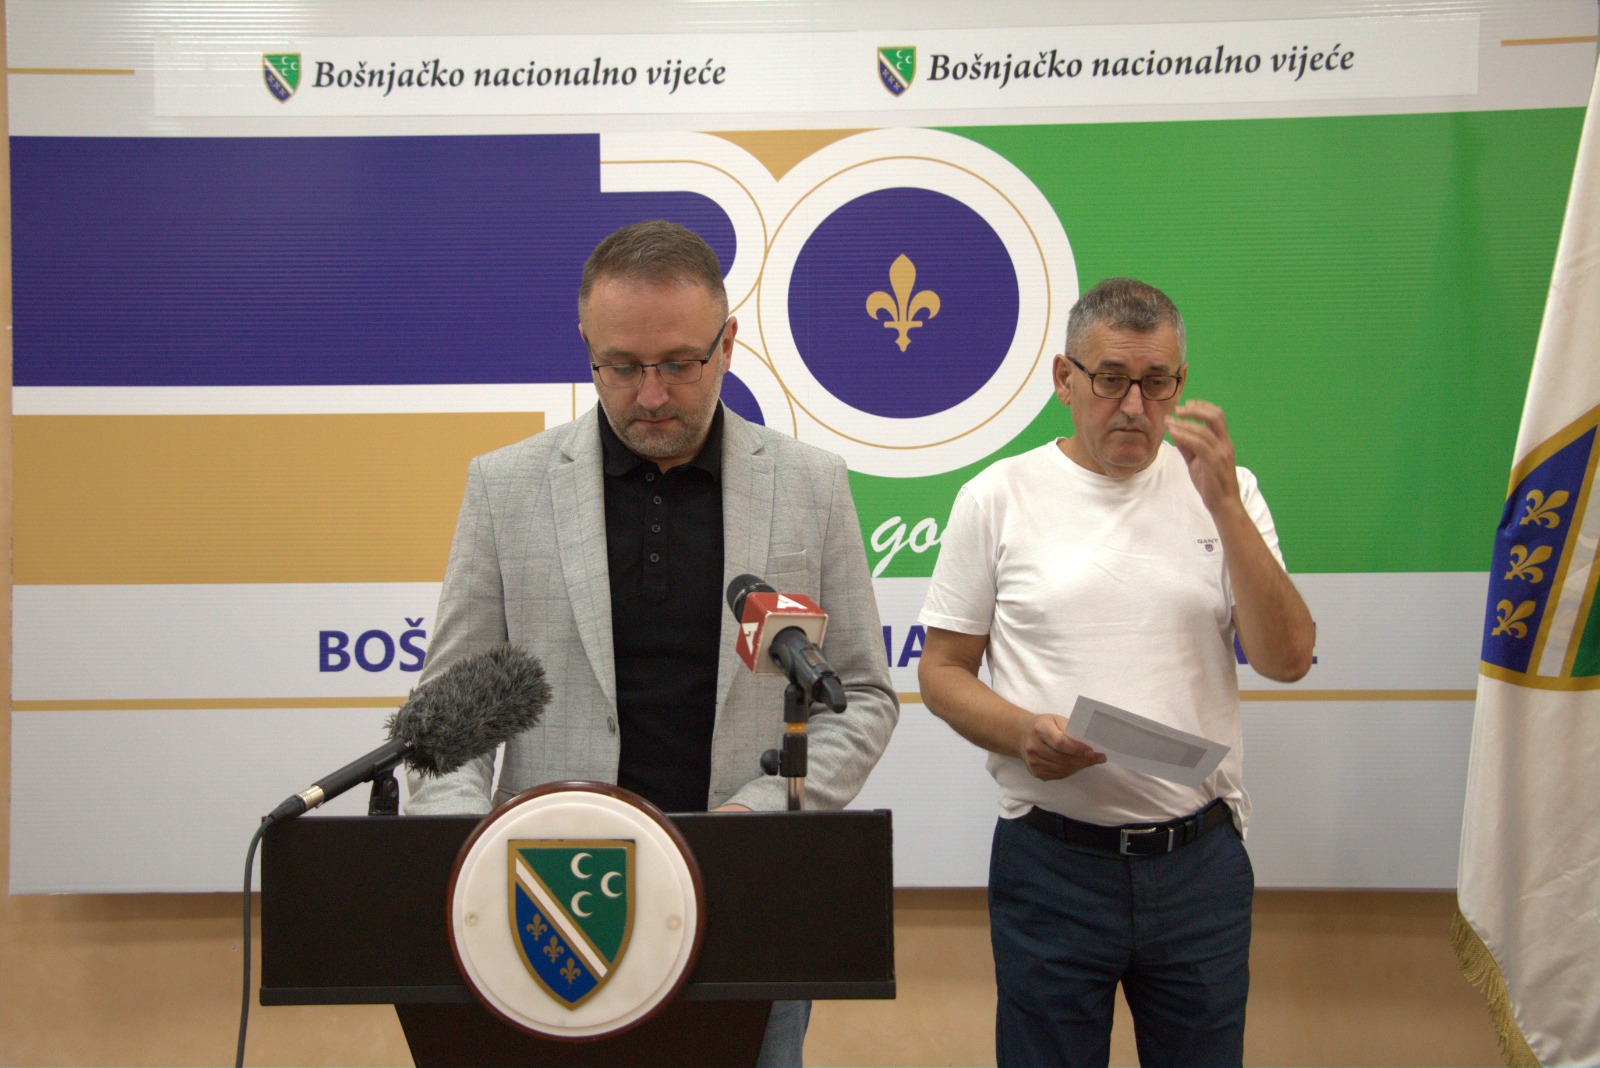 BNV organizuje Likovnu koloniju „Sjenica 2021“ (video)